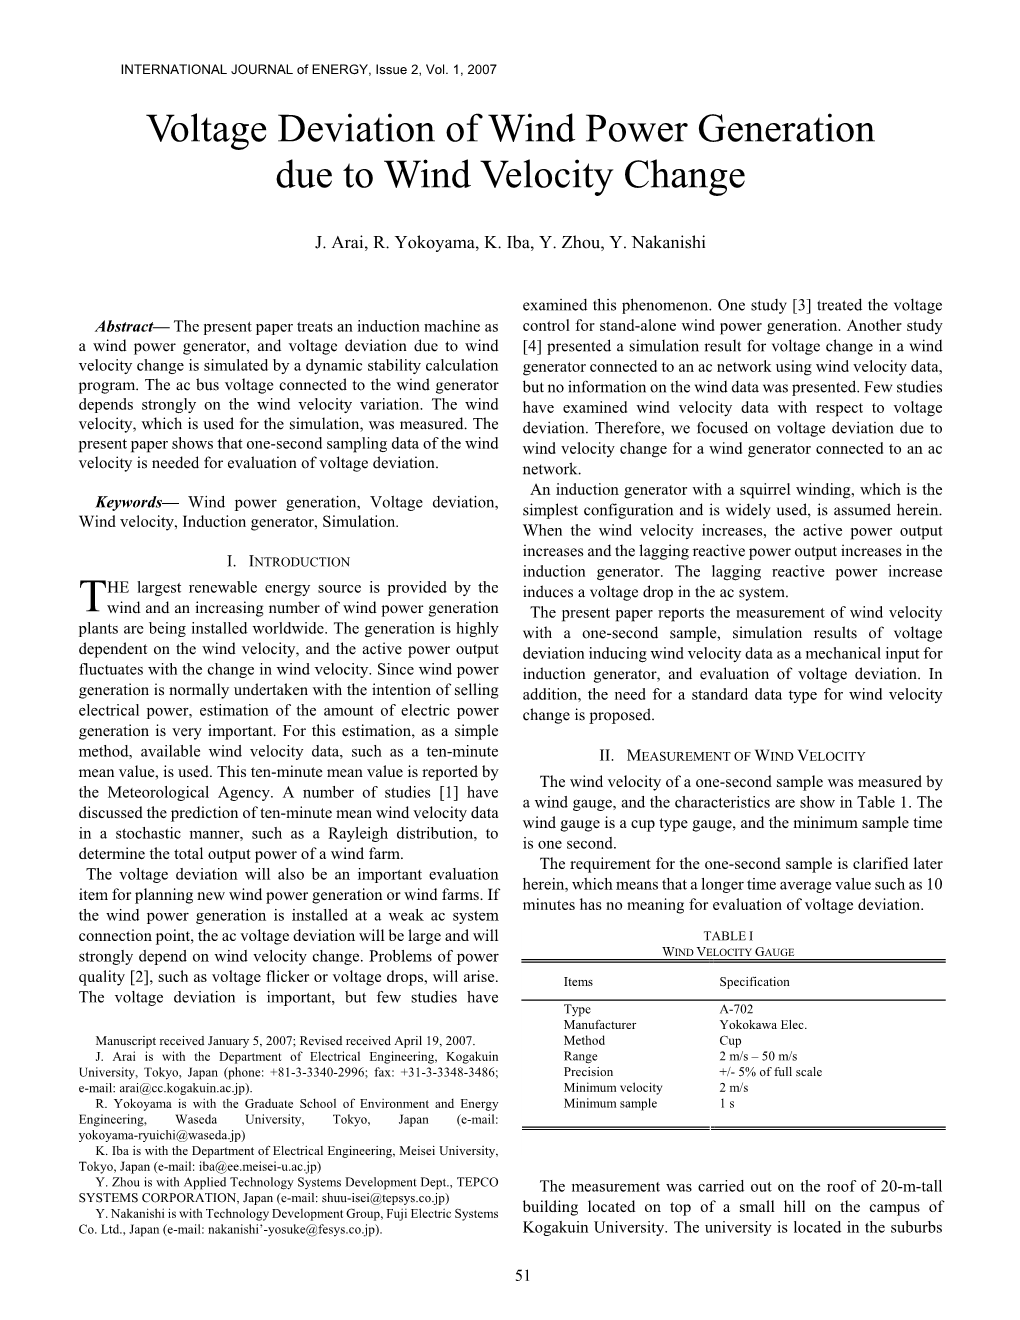 Voltage Deviation of Wind Power Generation Due to Wind Velocity Change